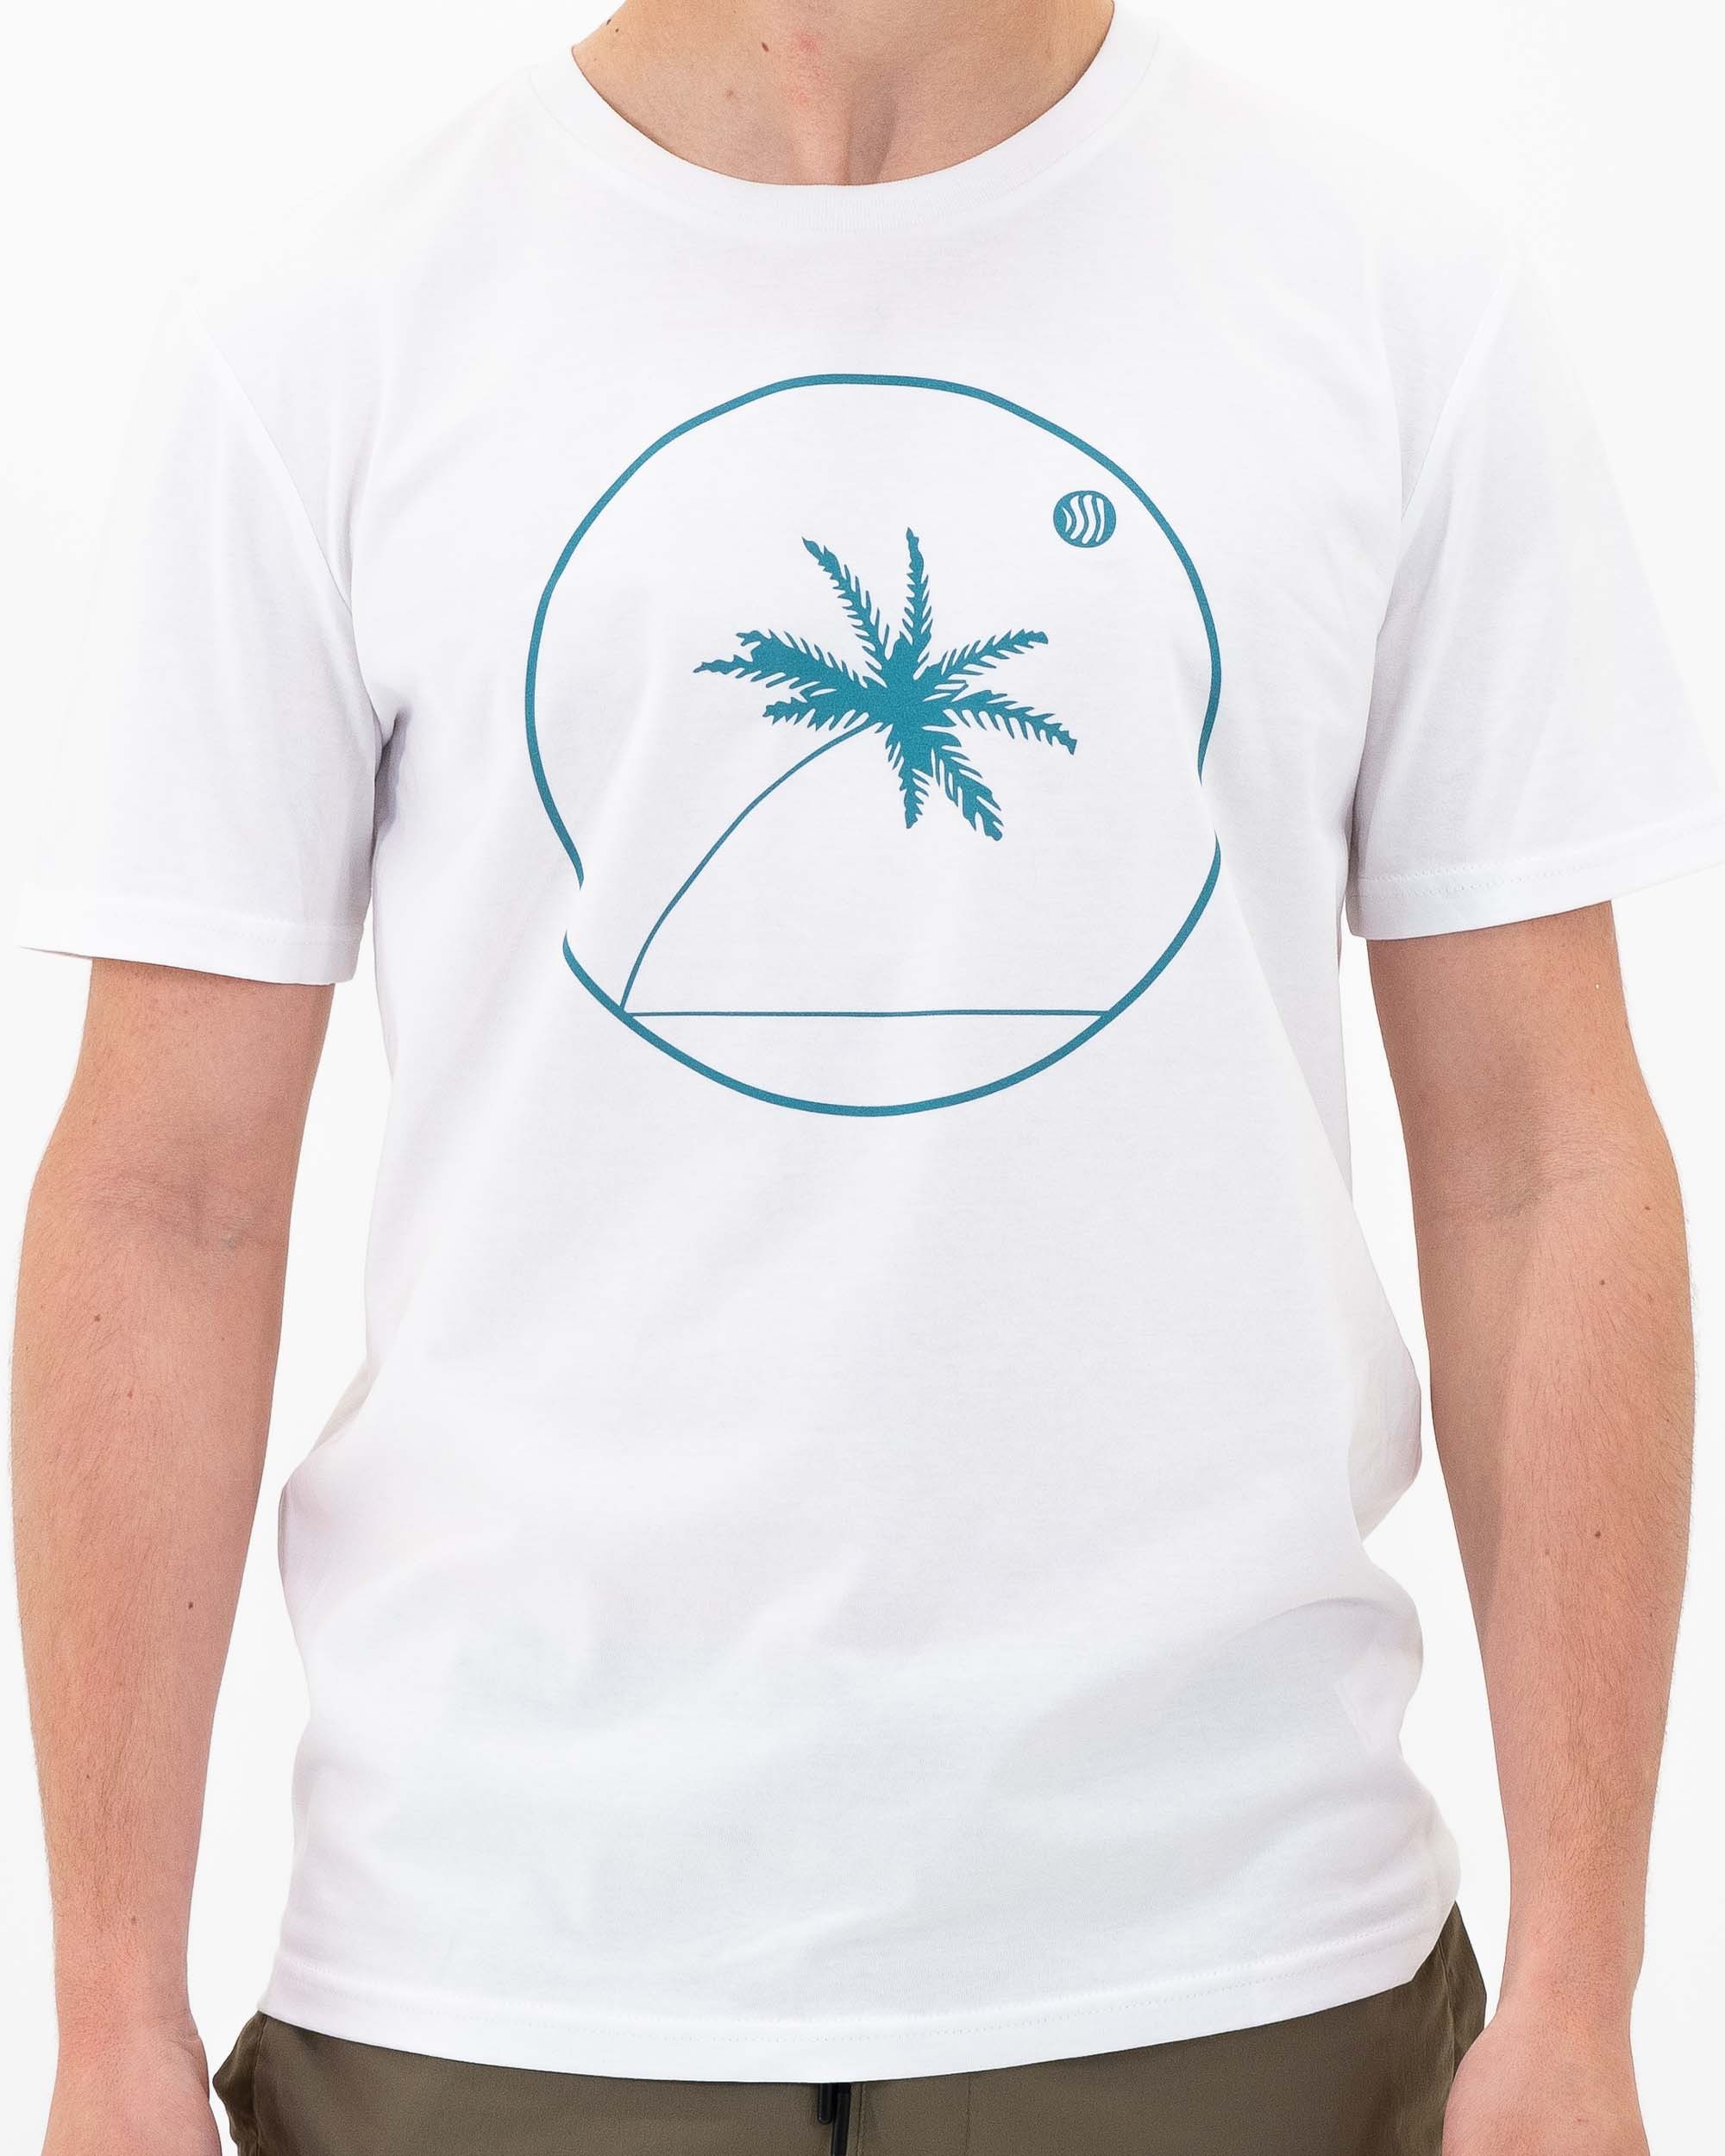 T-shirt Palmtree de couleur Blanc par Thymoos